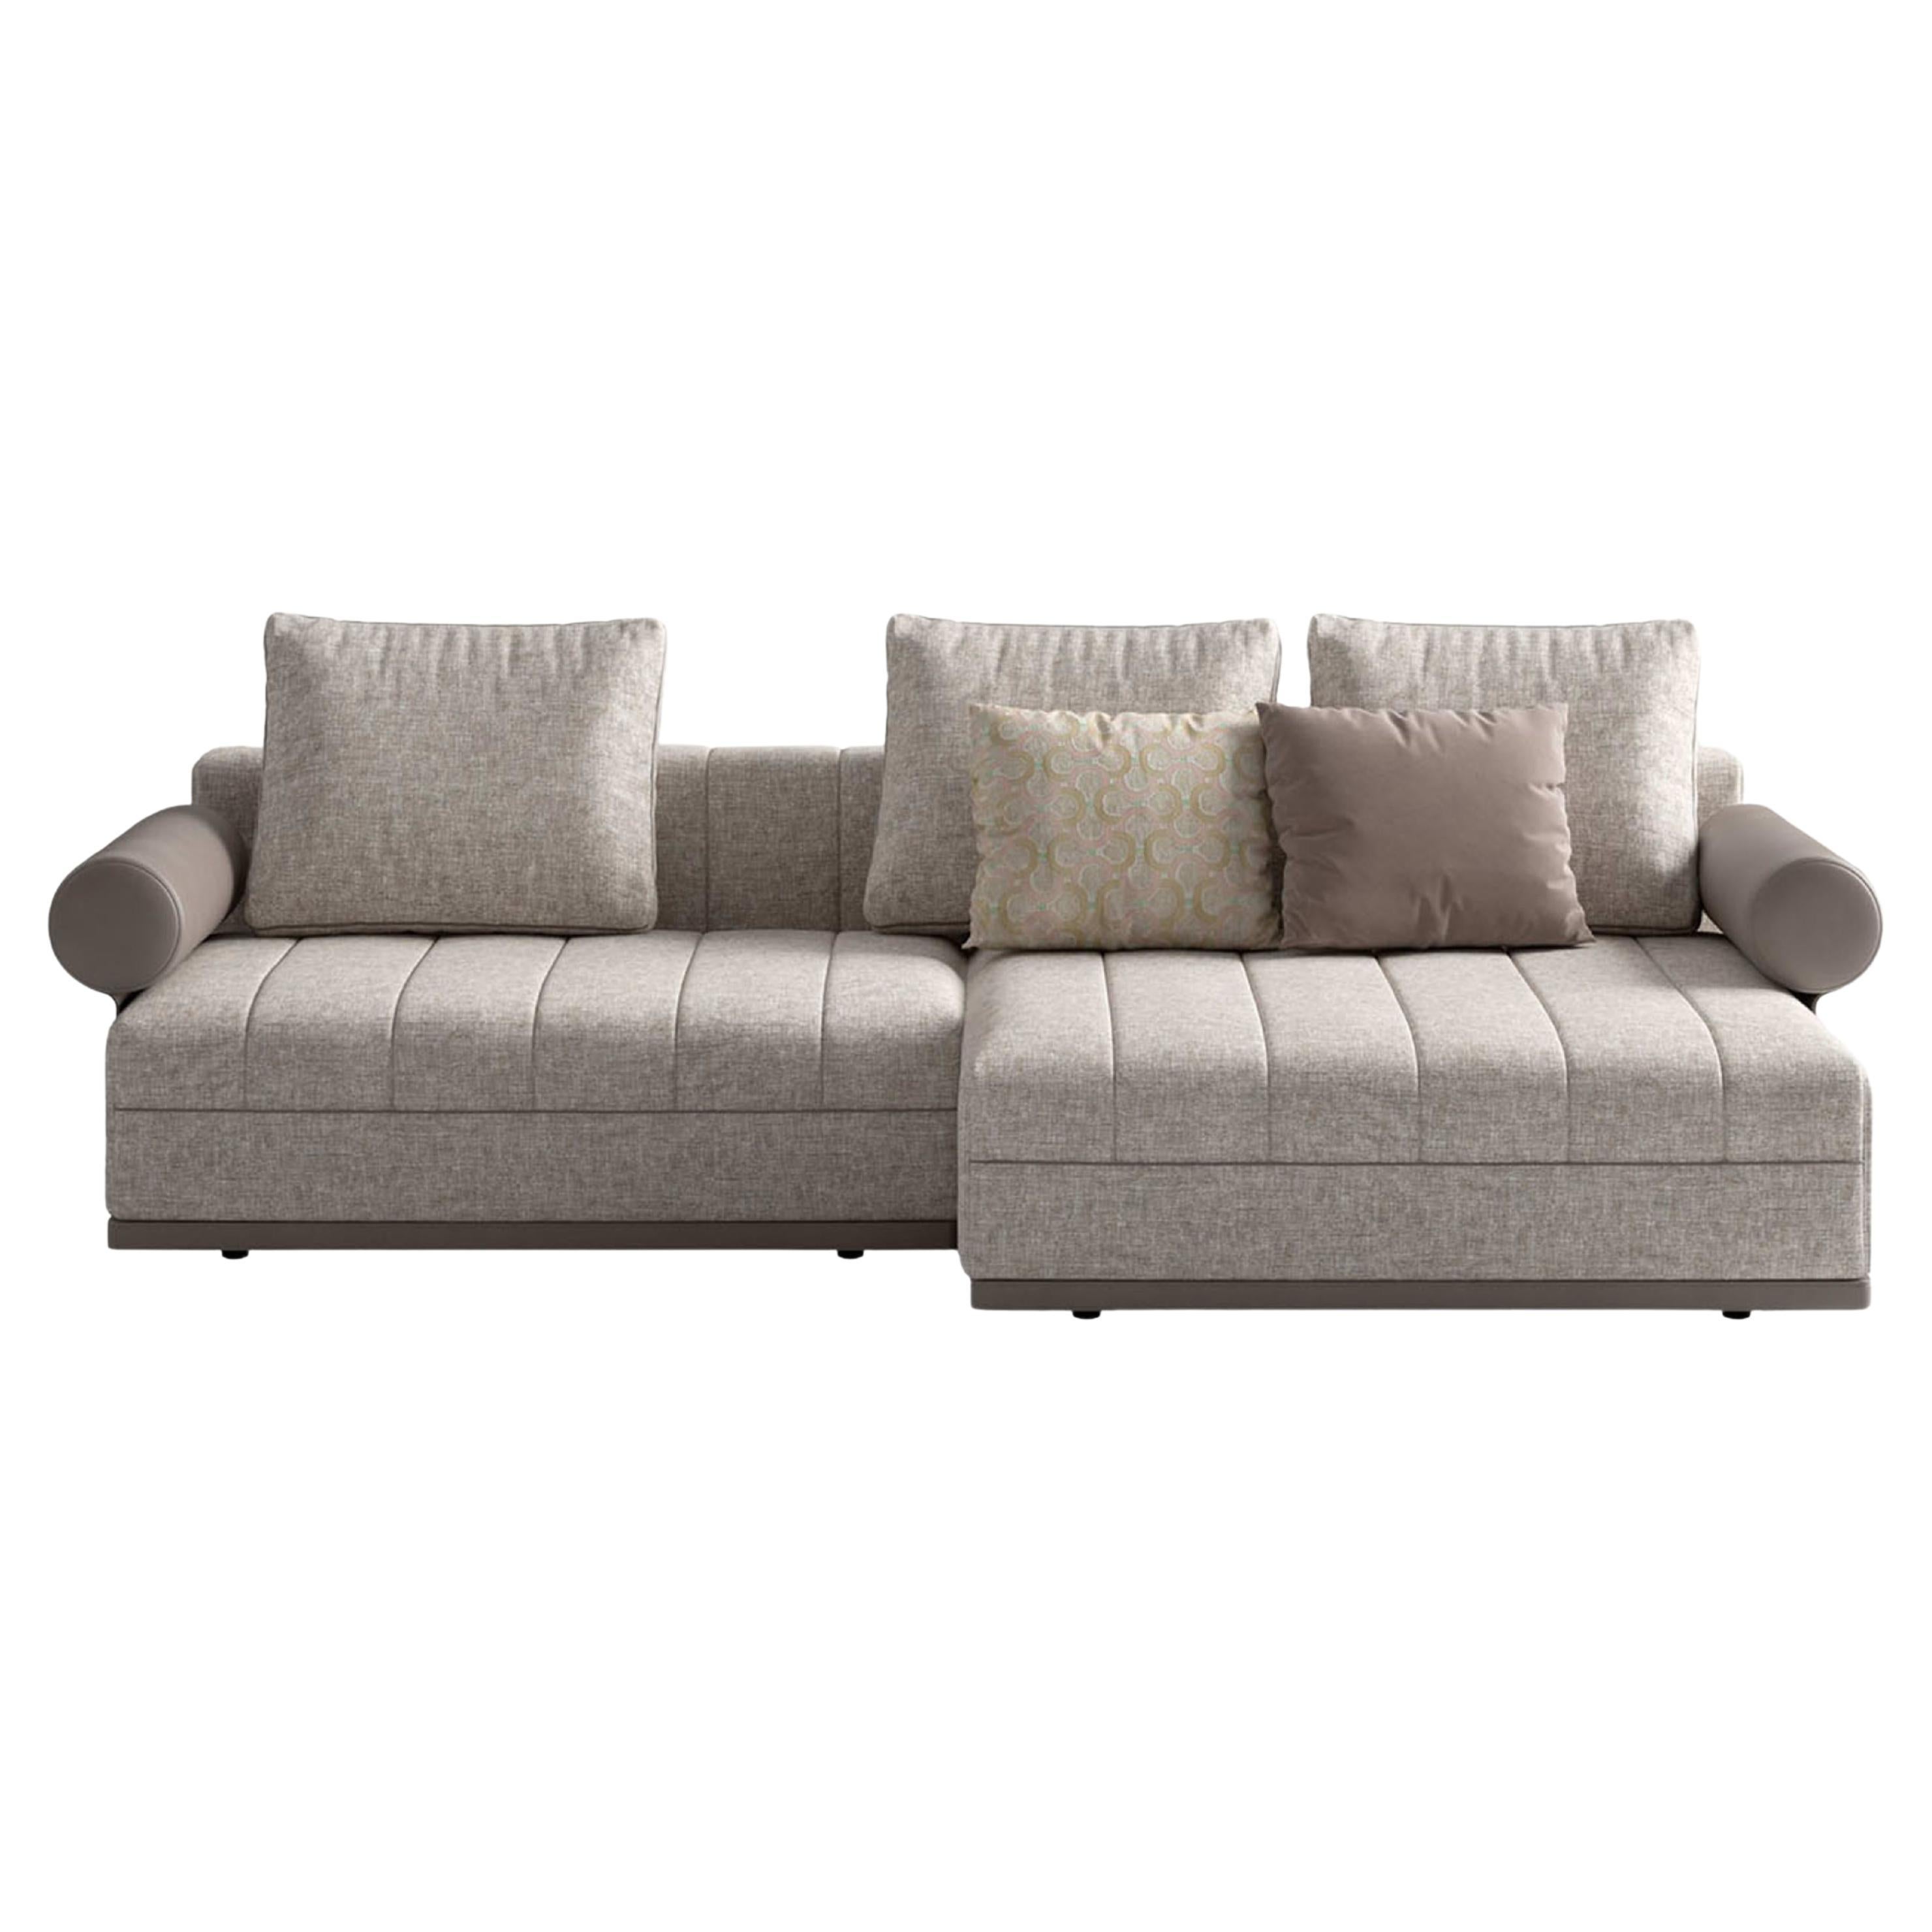 Gray & Beige Modular Sofa For Sale